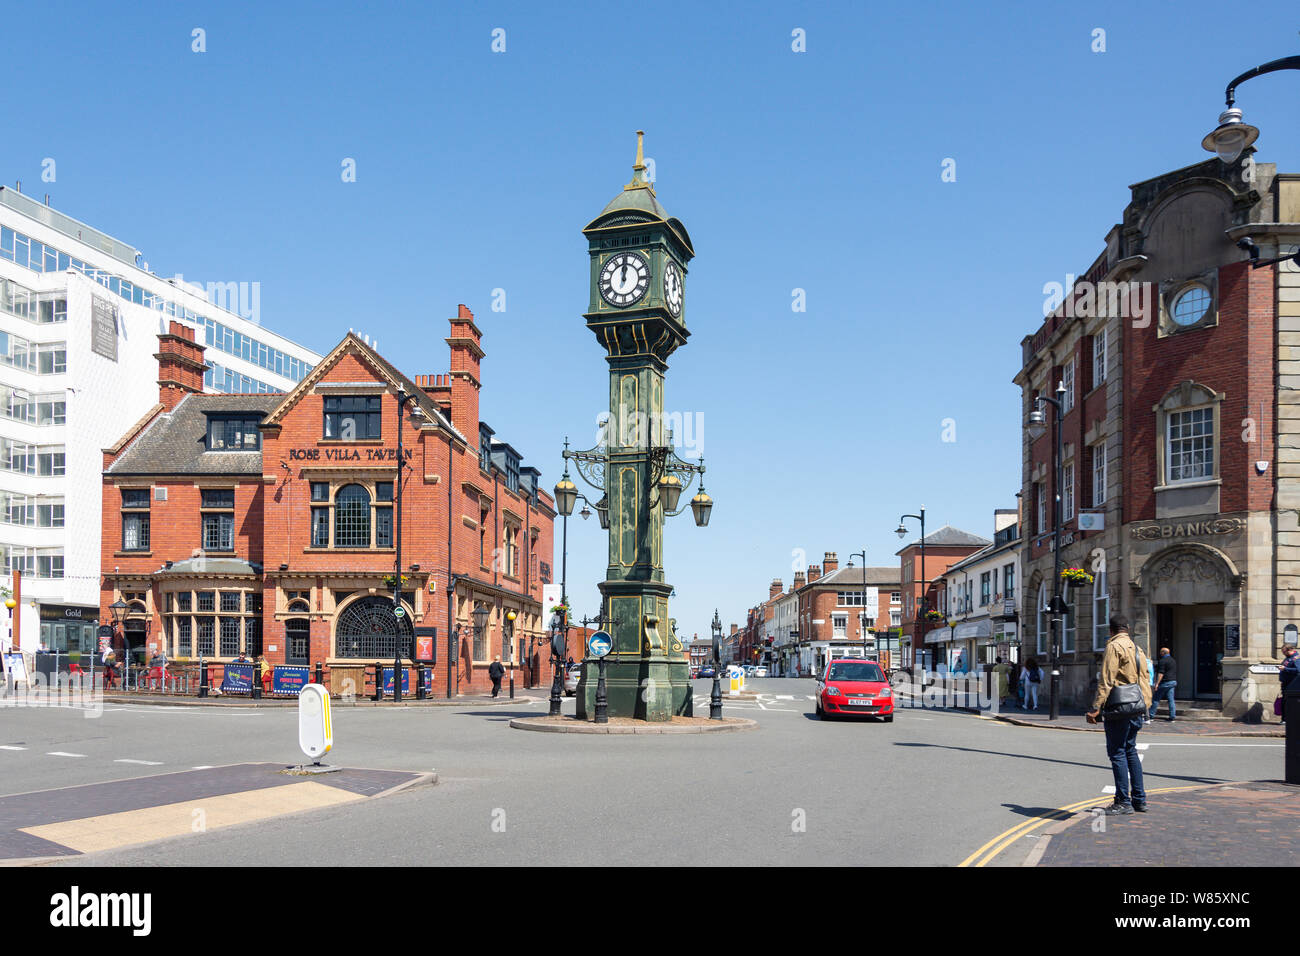 Chamberlain Clock and Rose Villa Tavern, Warstone Lane, Jewellery Quarter, Birmingham, West Midlands, England, United Kingdom Stock Photo